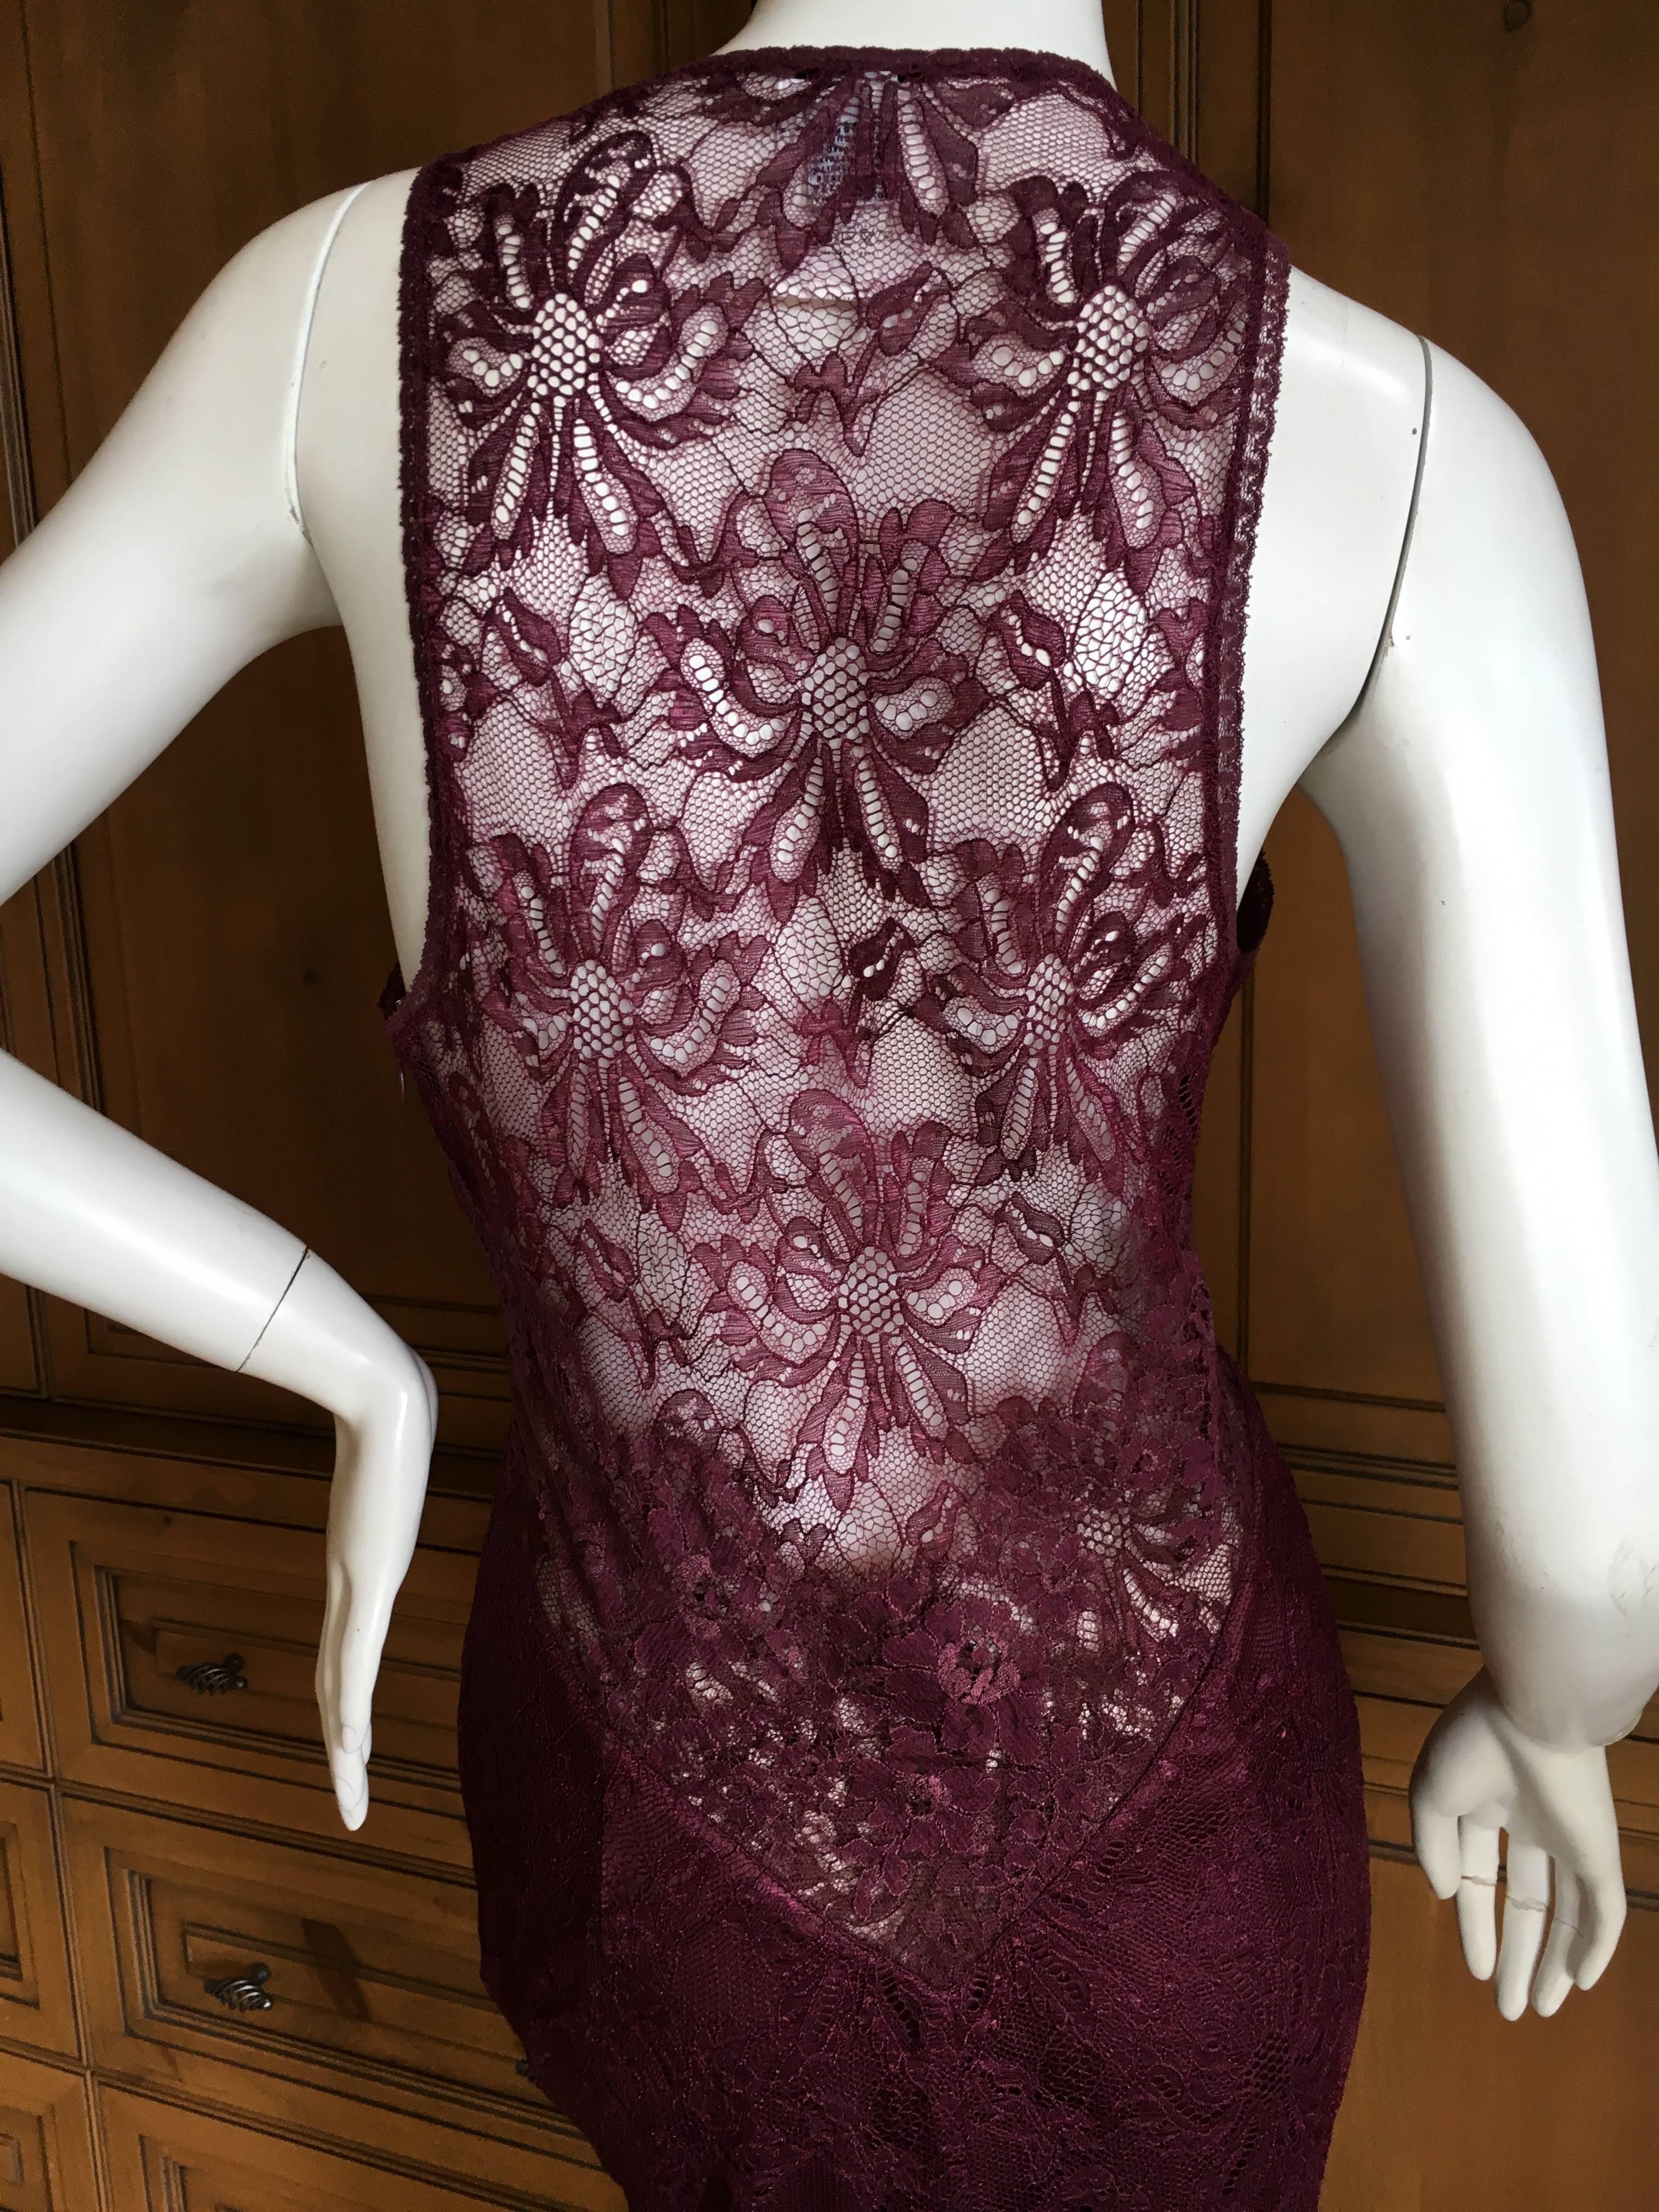  D&G Dolce & Gabbana Vintage Lace Overlay Sheer Cocktail Dress For Sale 2